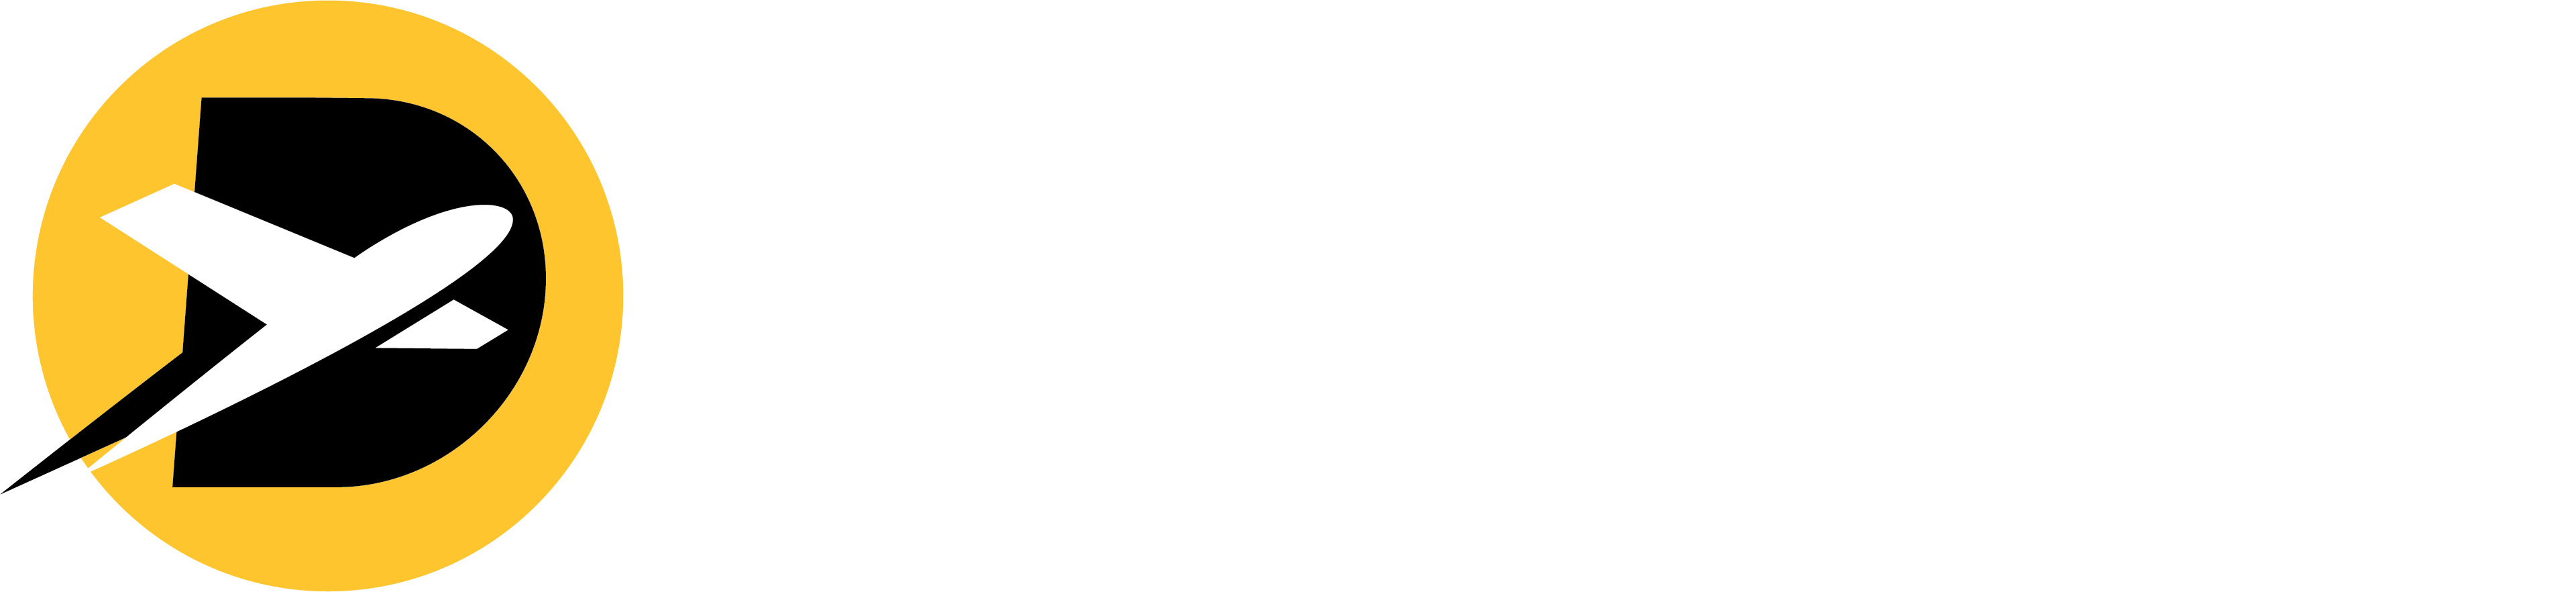 Destinations-Logo-WIDE-White-Yellow123